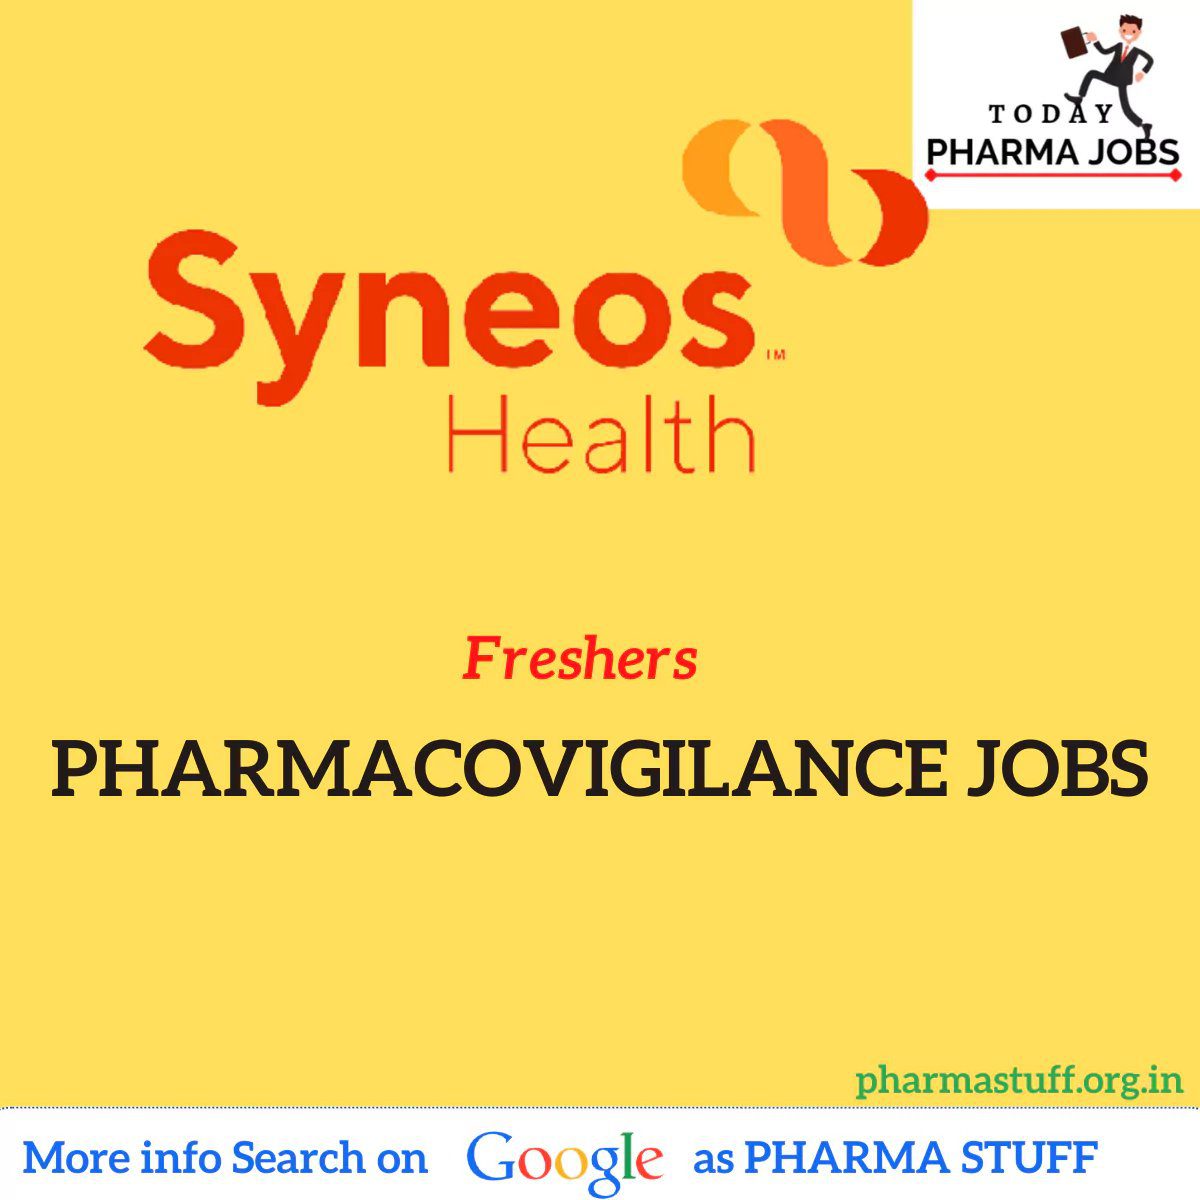 %titl fresher pharmacovigilance jobs syneos health7820039996443963334.